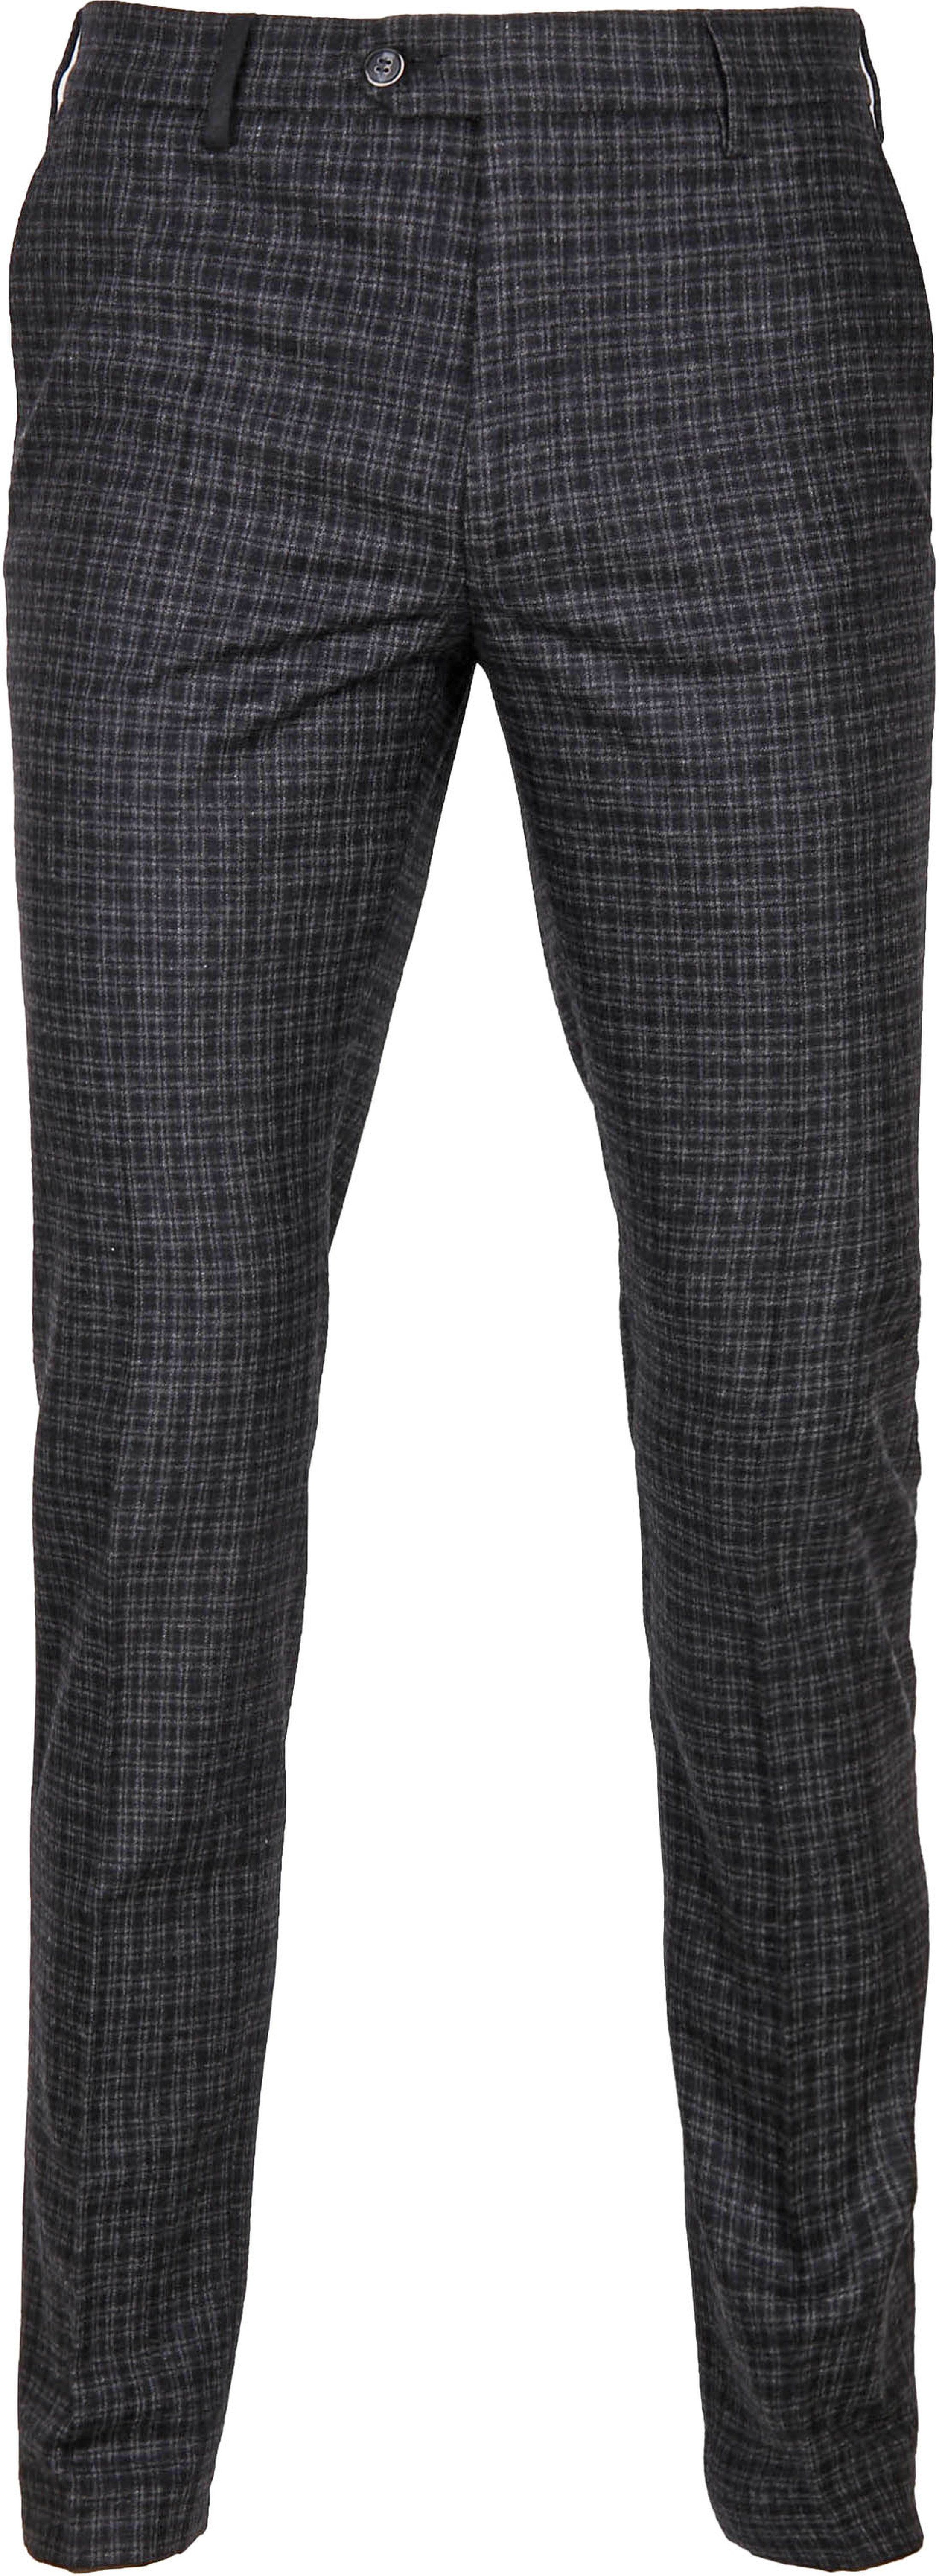 Suitable Pantalon Milano Pane Anthracite Dark Grey Grey size W 32/33